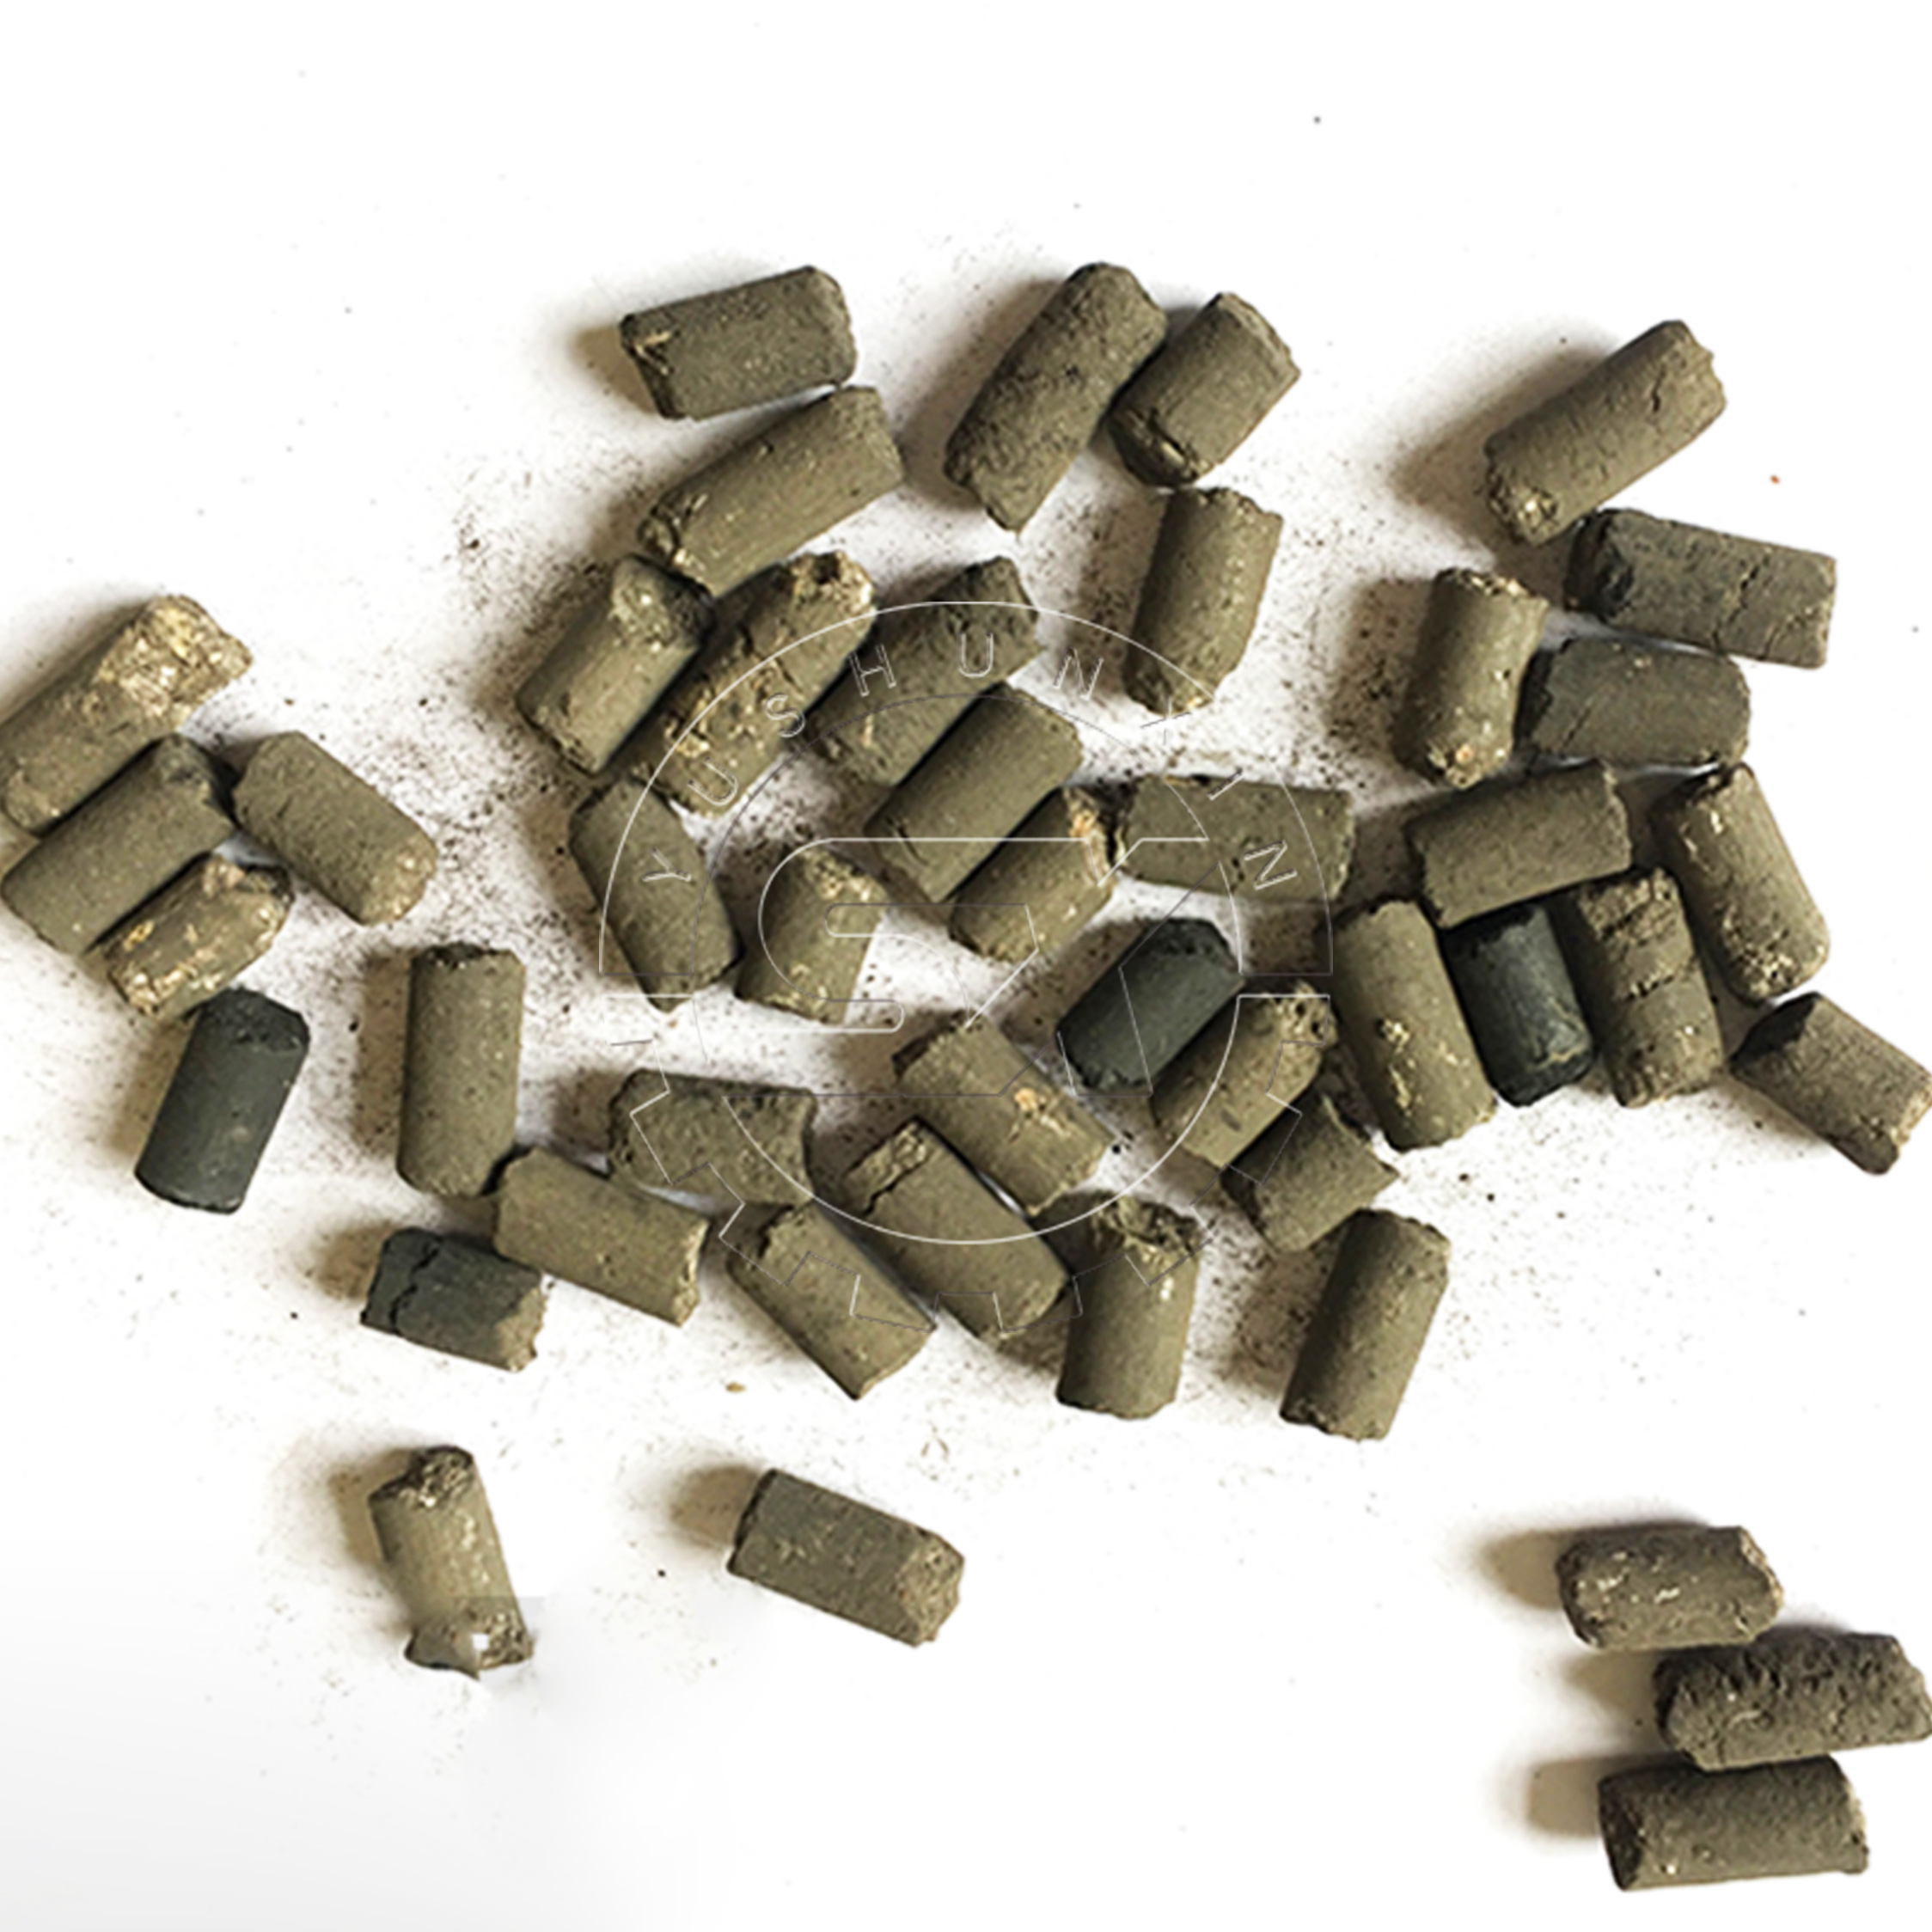 Fertilizer pellets made by flat die granulator